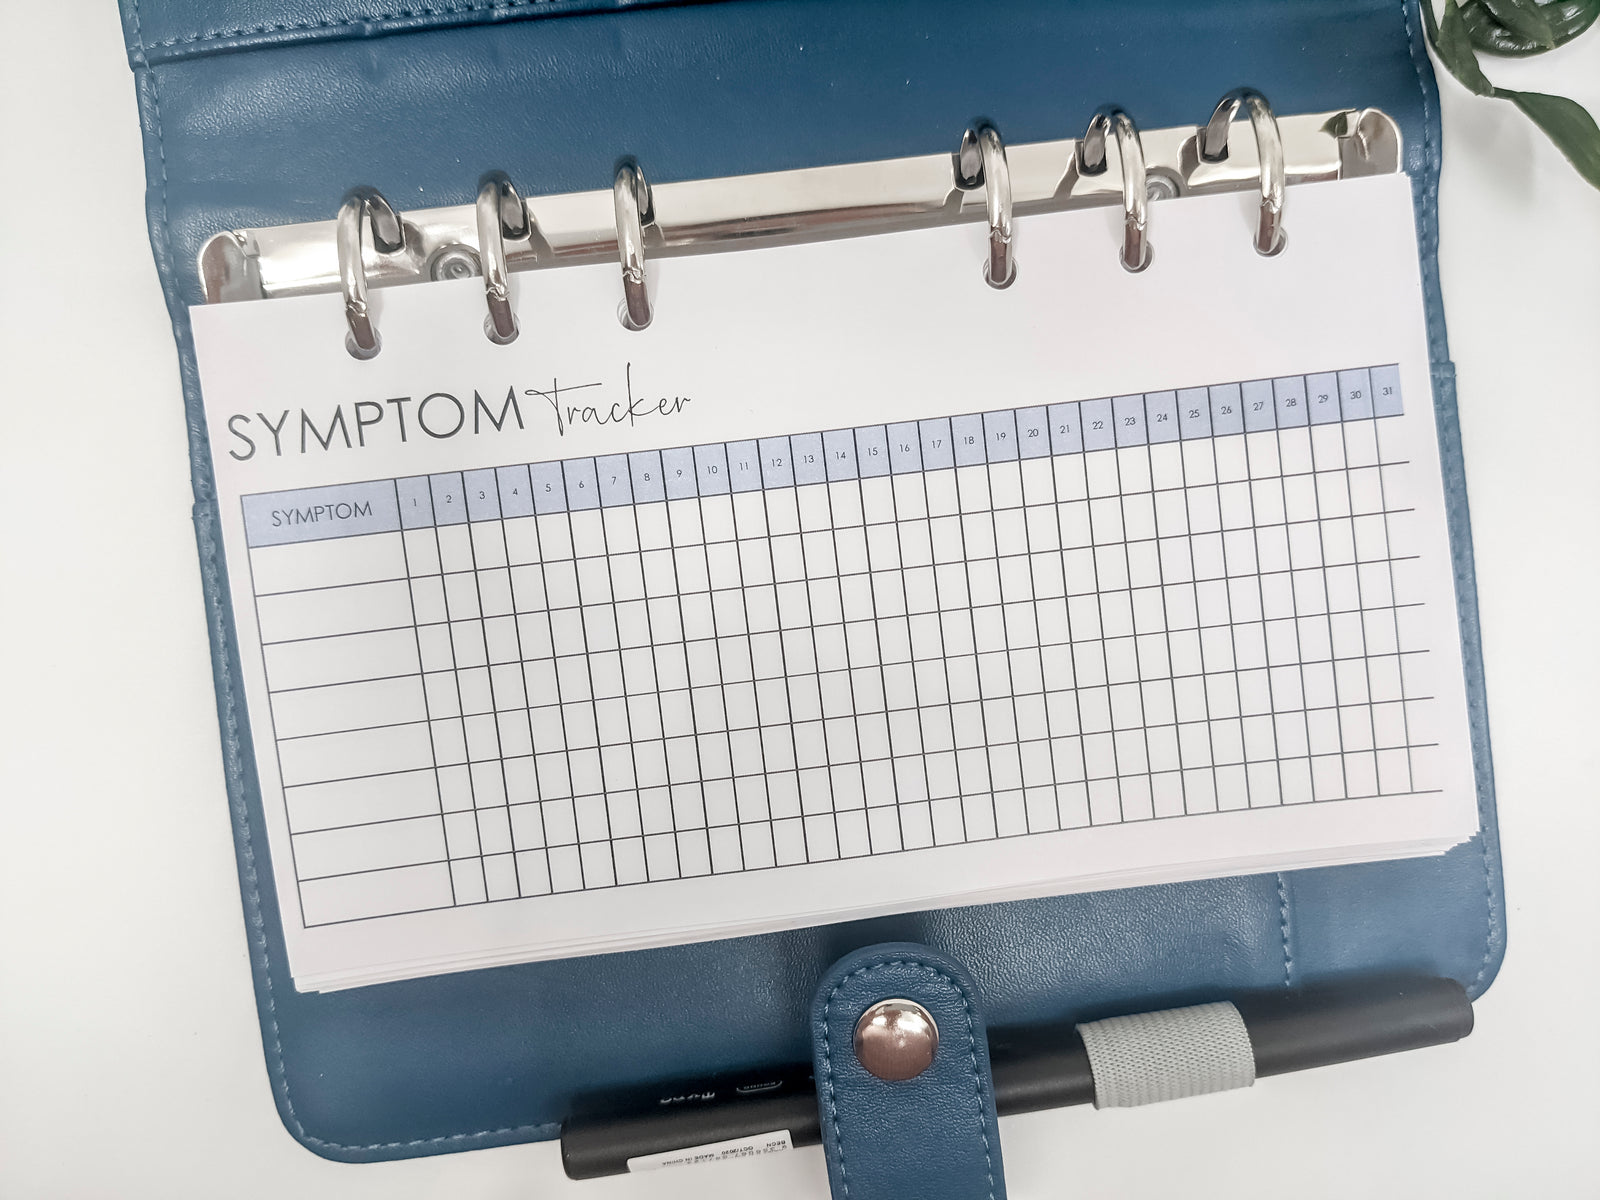 Symptom tracker personal size planner inserts